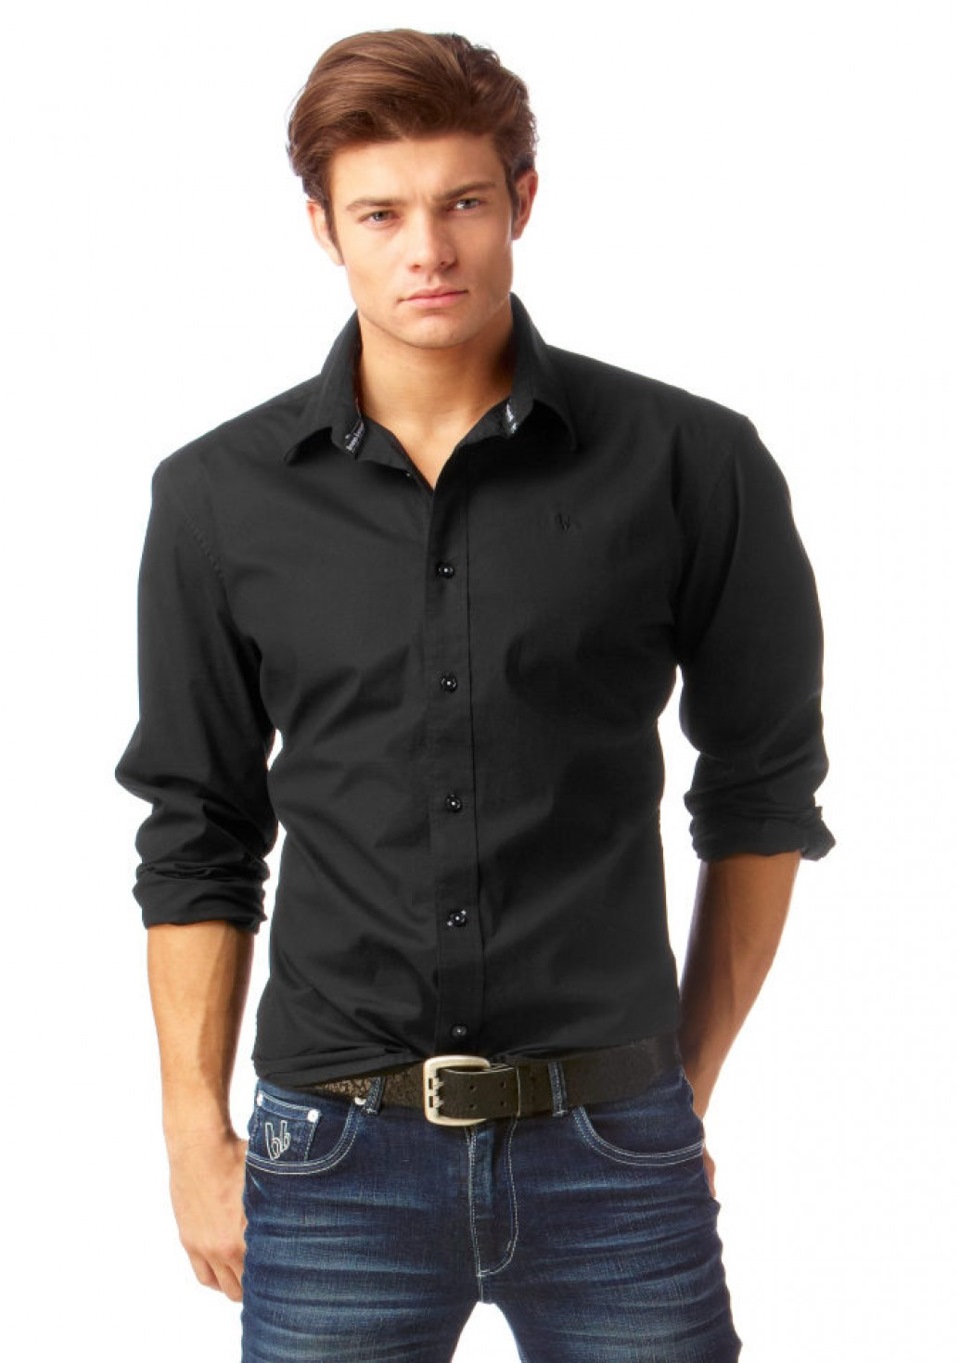 Черная рубашка мужчины